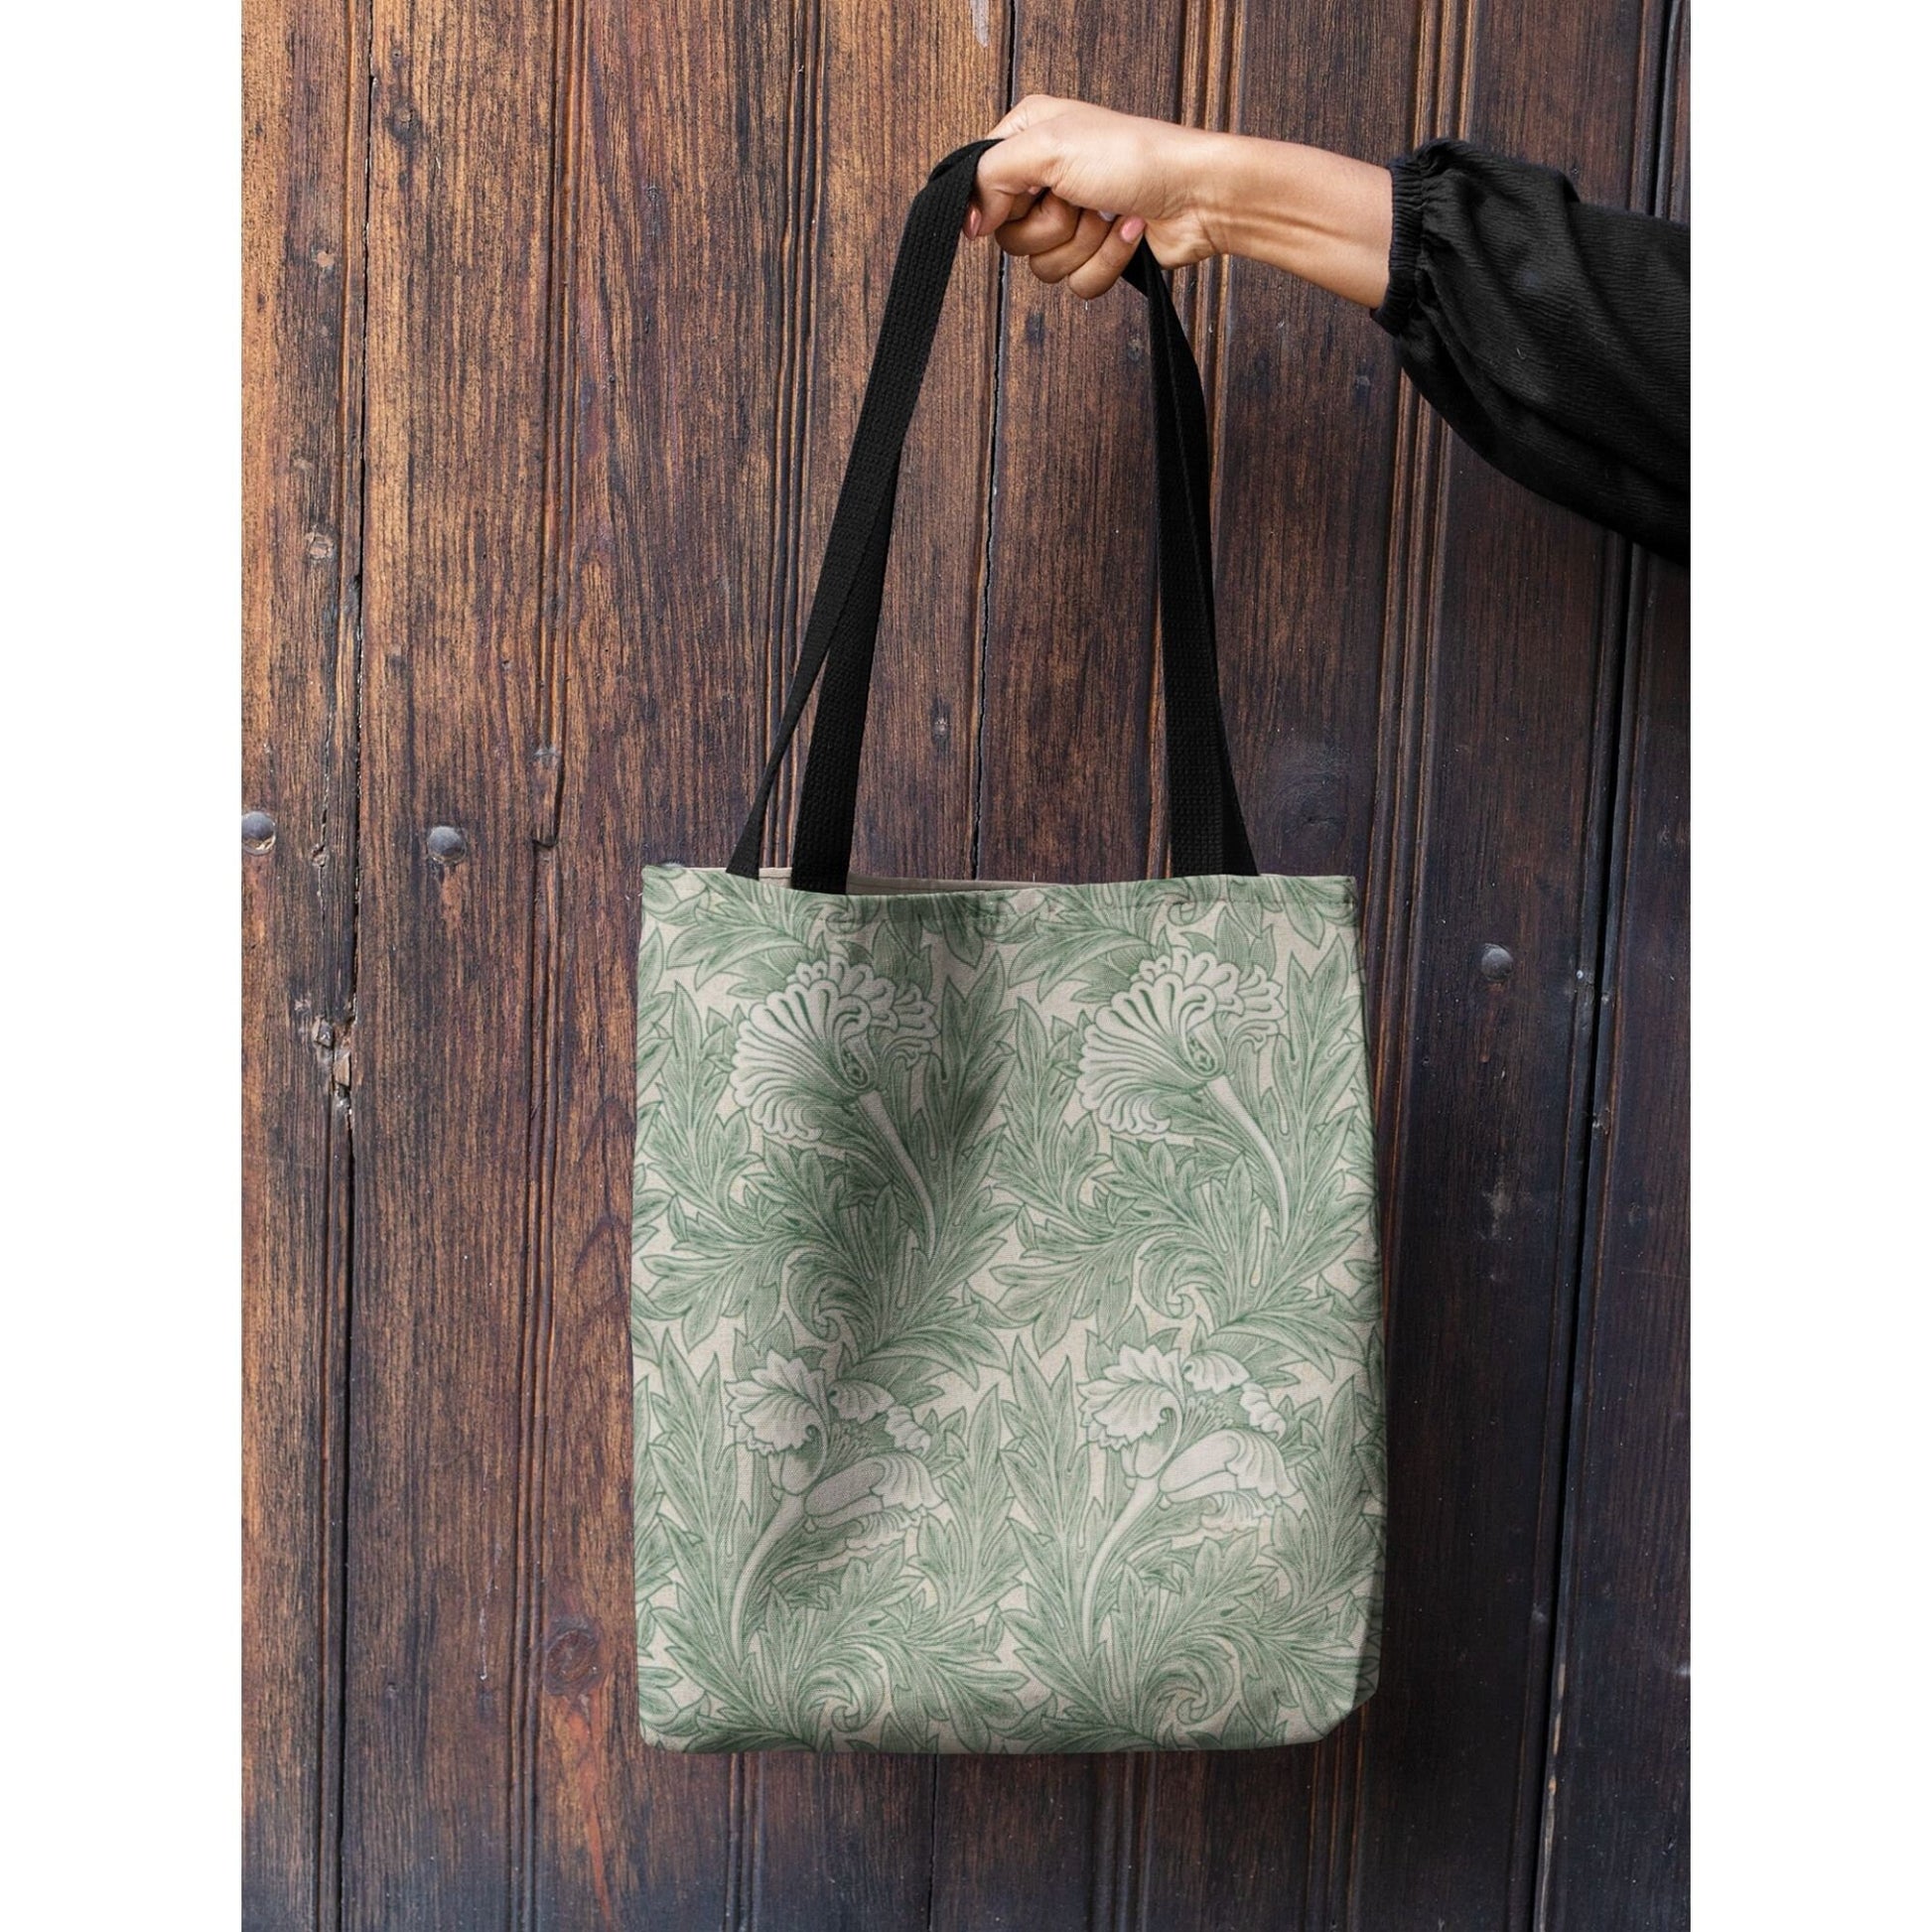 Green William Morris TOTE BAG - Tulip Pattern - Vintage Art Inspired